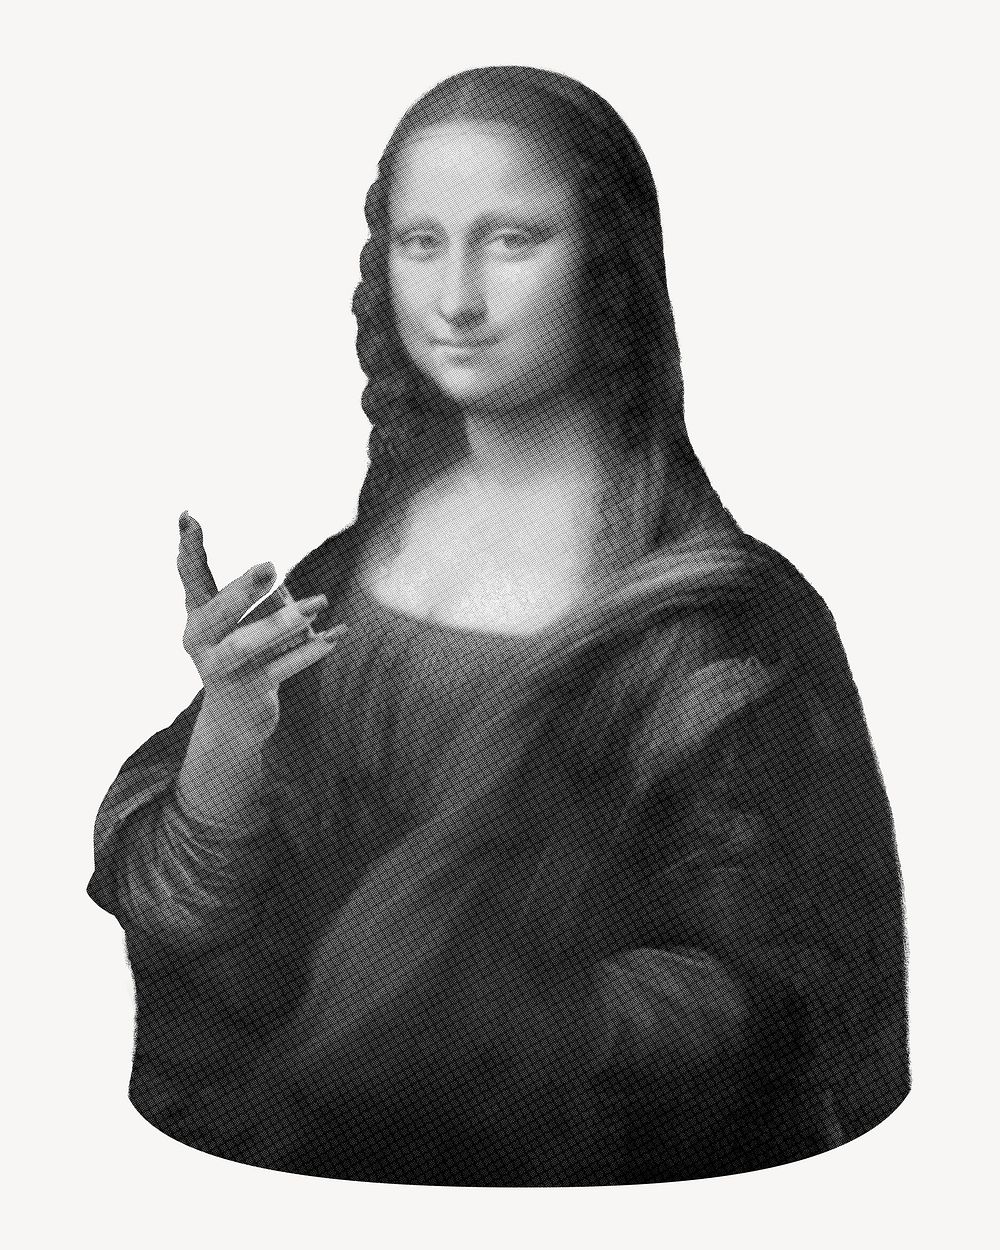 Mona Lisa in greyscale, Da Vinci's famous artwork, remixed by rawpixel